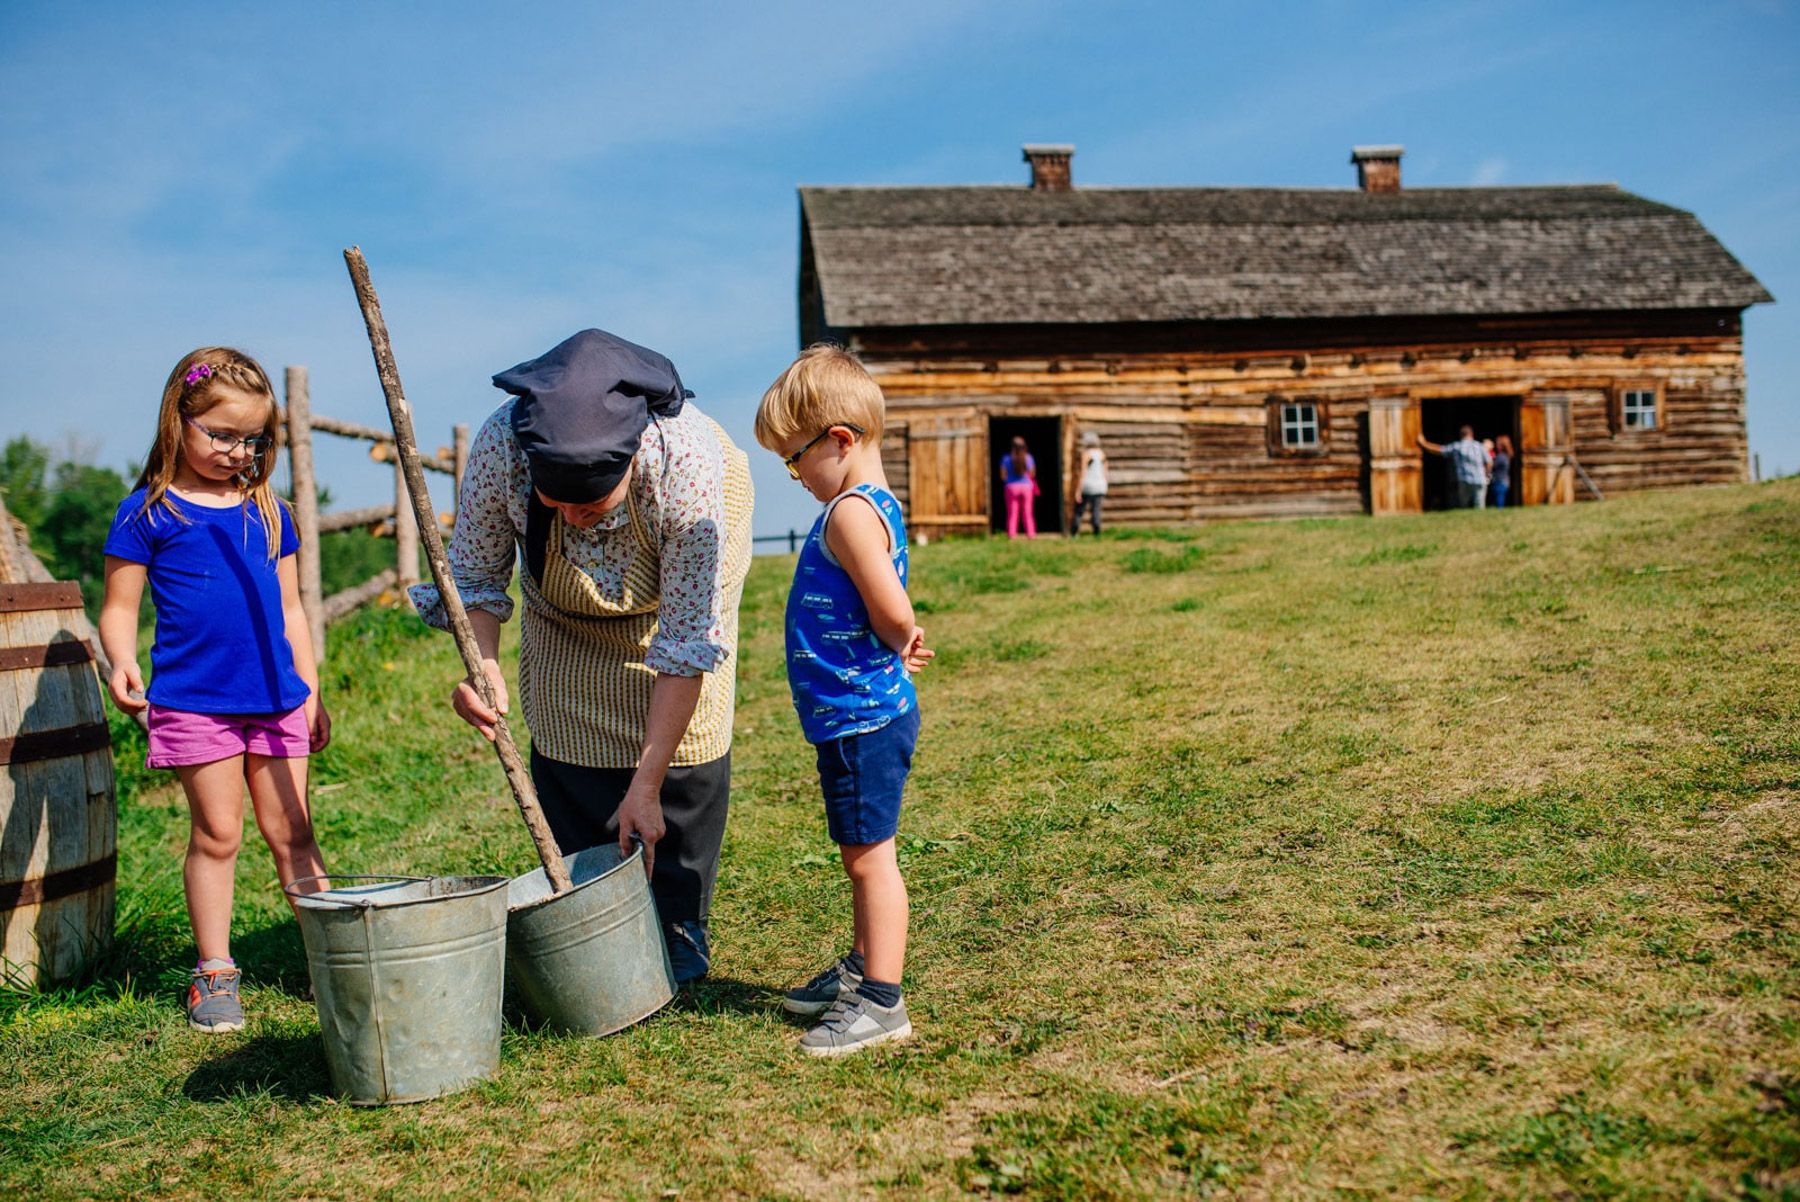 Ukrainian Cultural Heritage Village